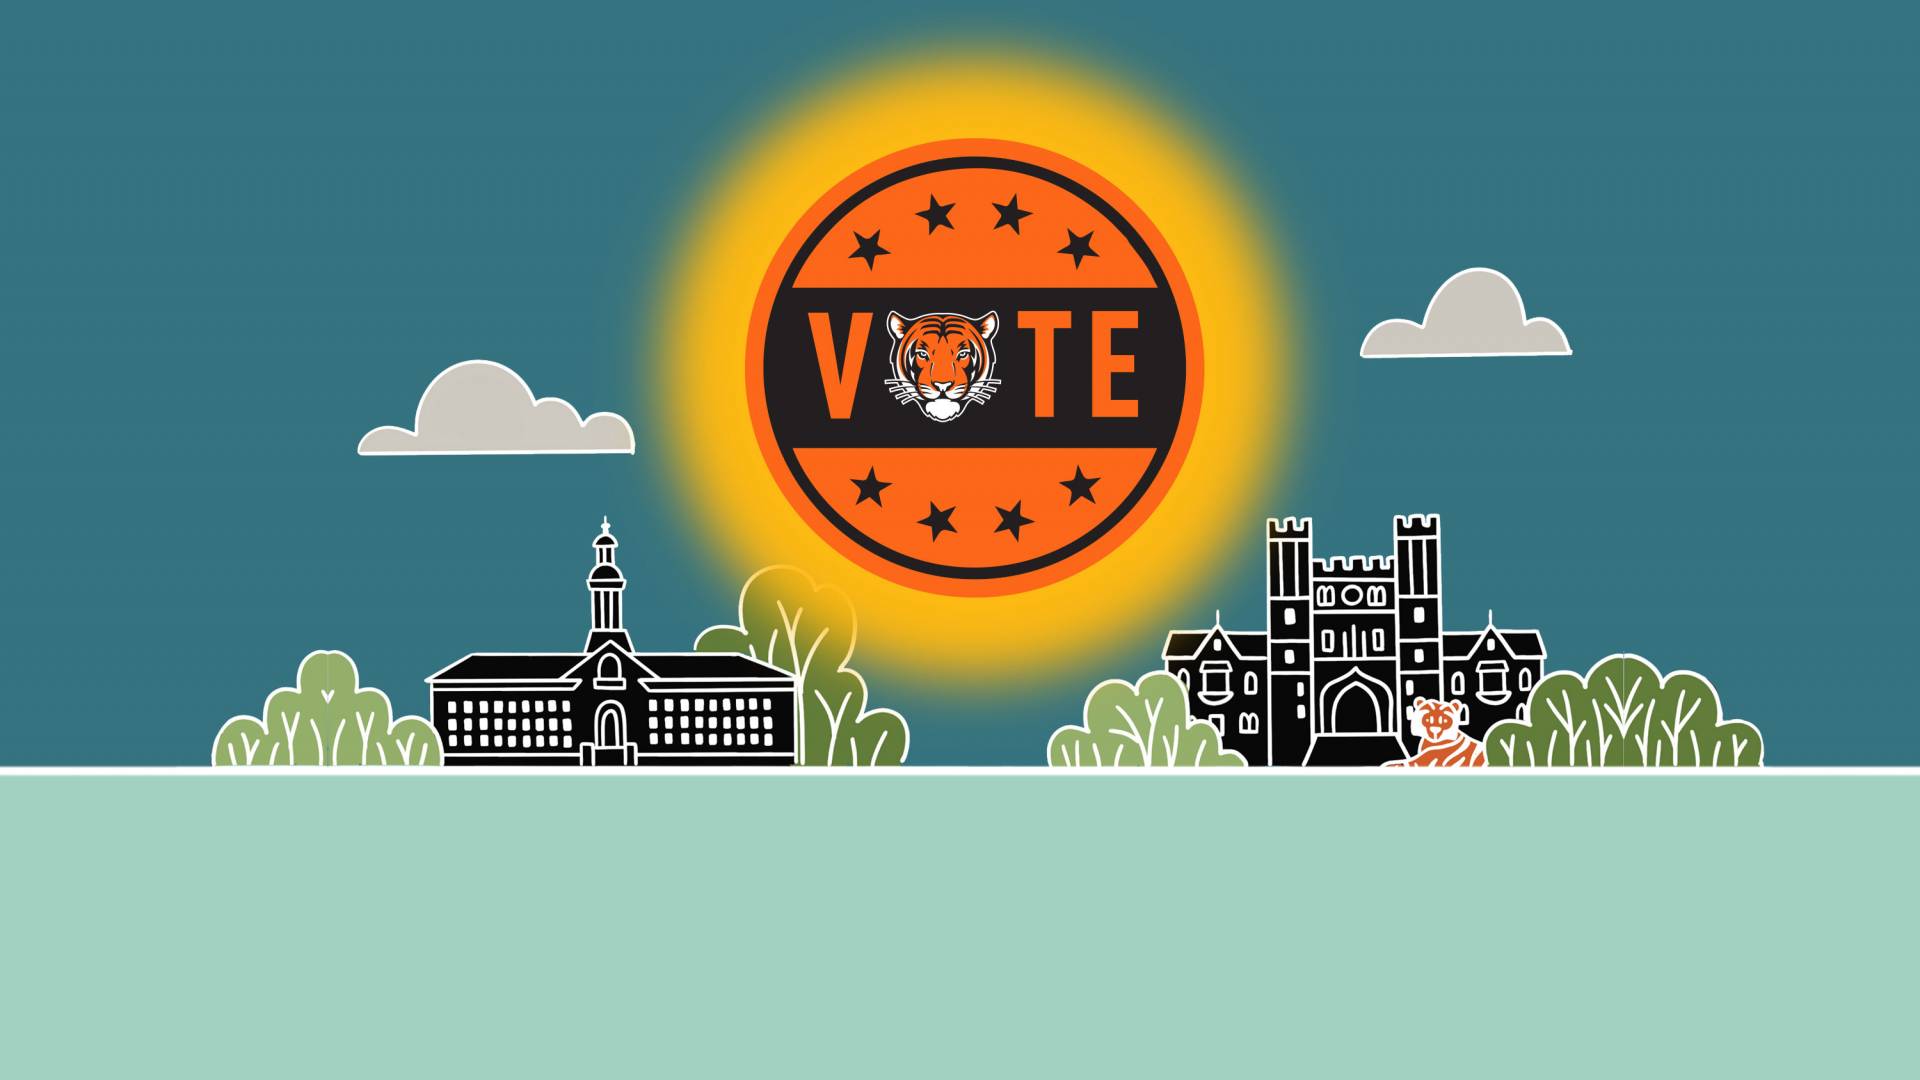 illustration of orange vote button rising like the sun in a campus landscape